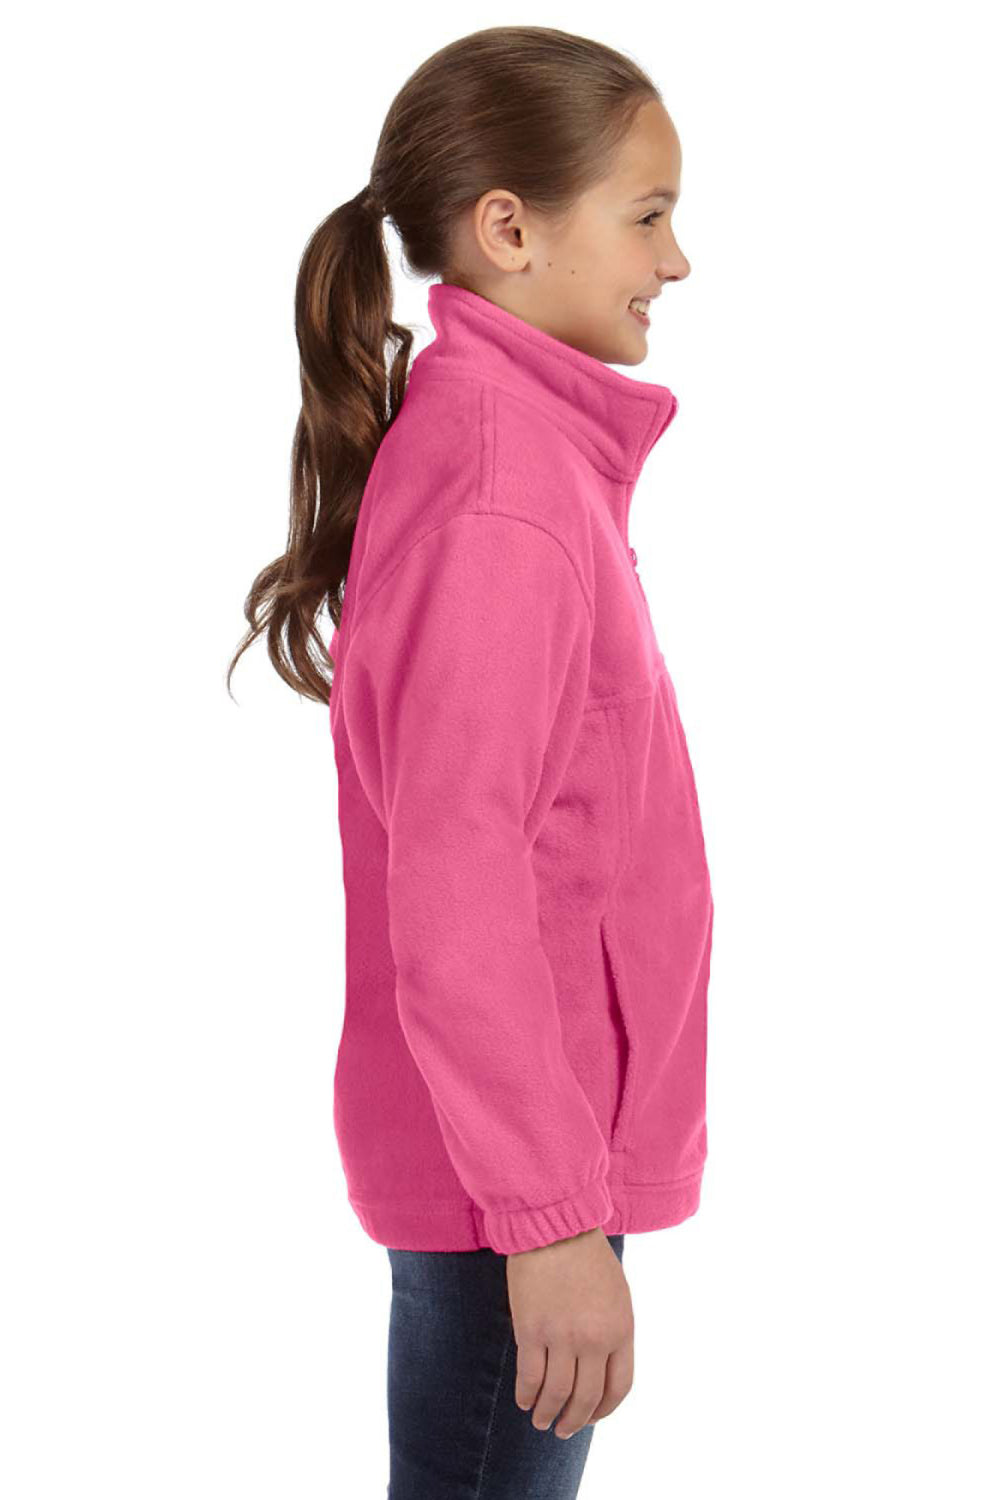 Harriton M990Y Youth Full Zip Fleece Jacket Charity Pink Side